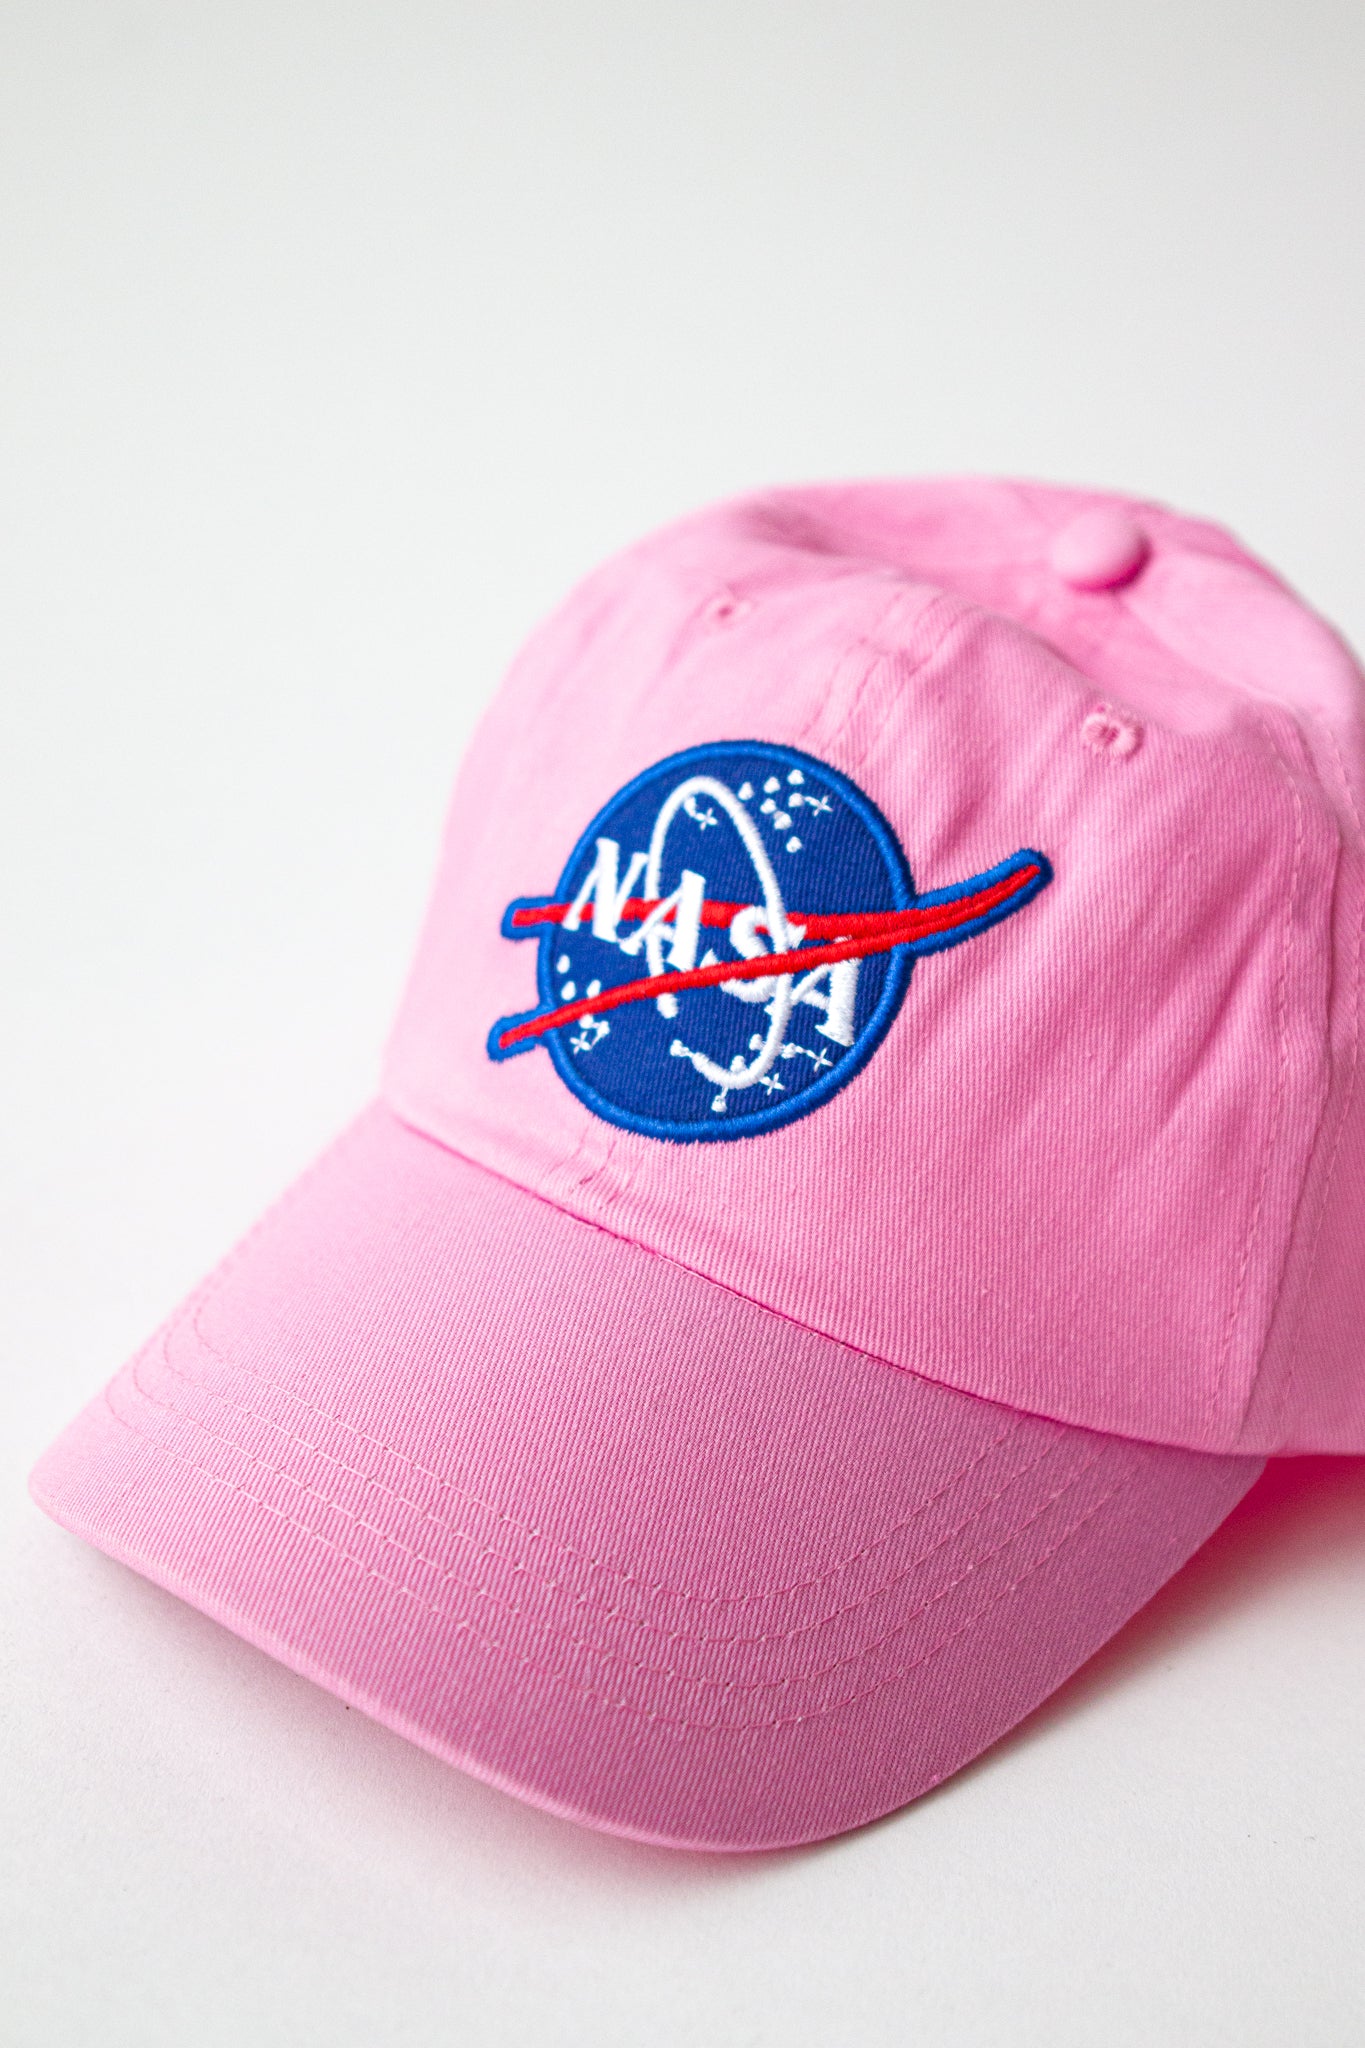 NASA cap - Stemcell Science Shop